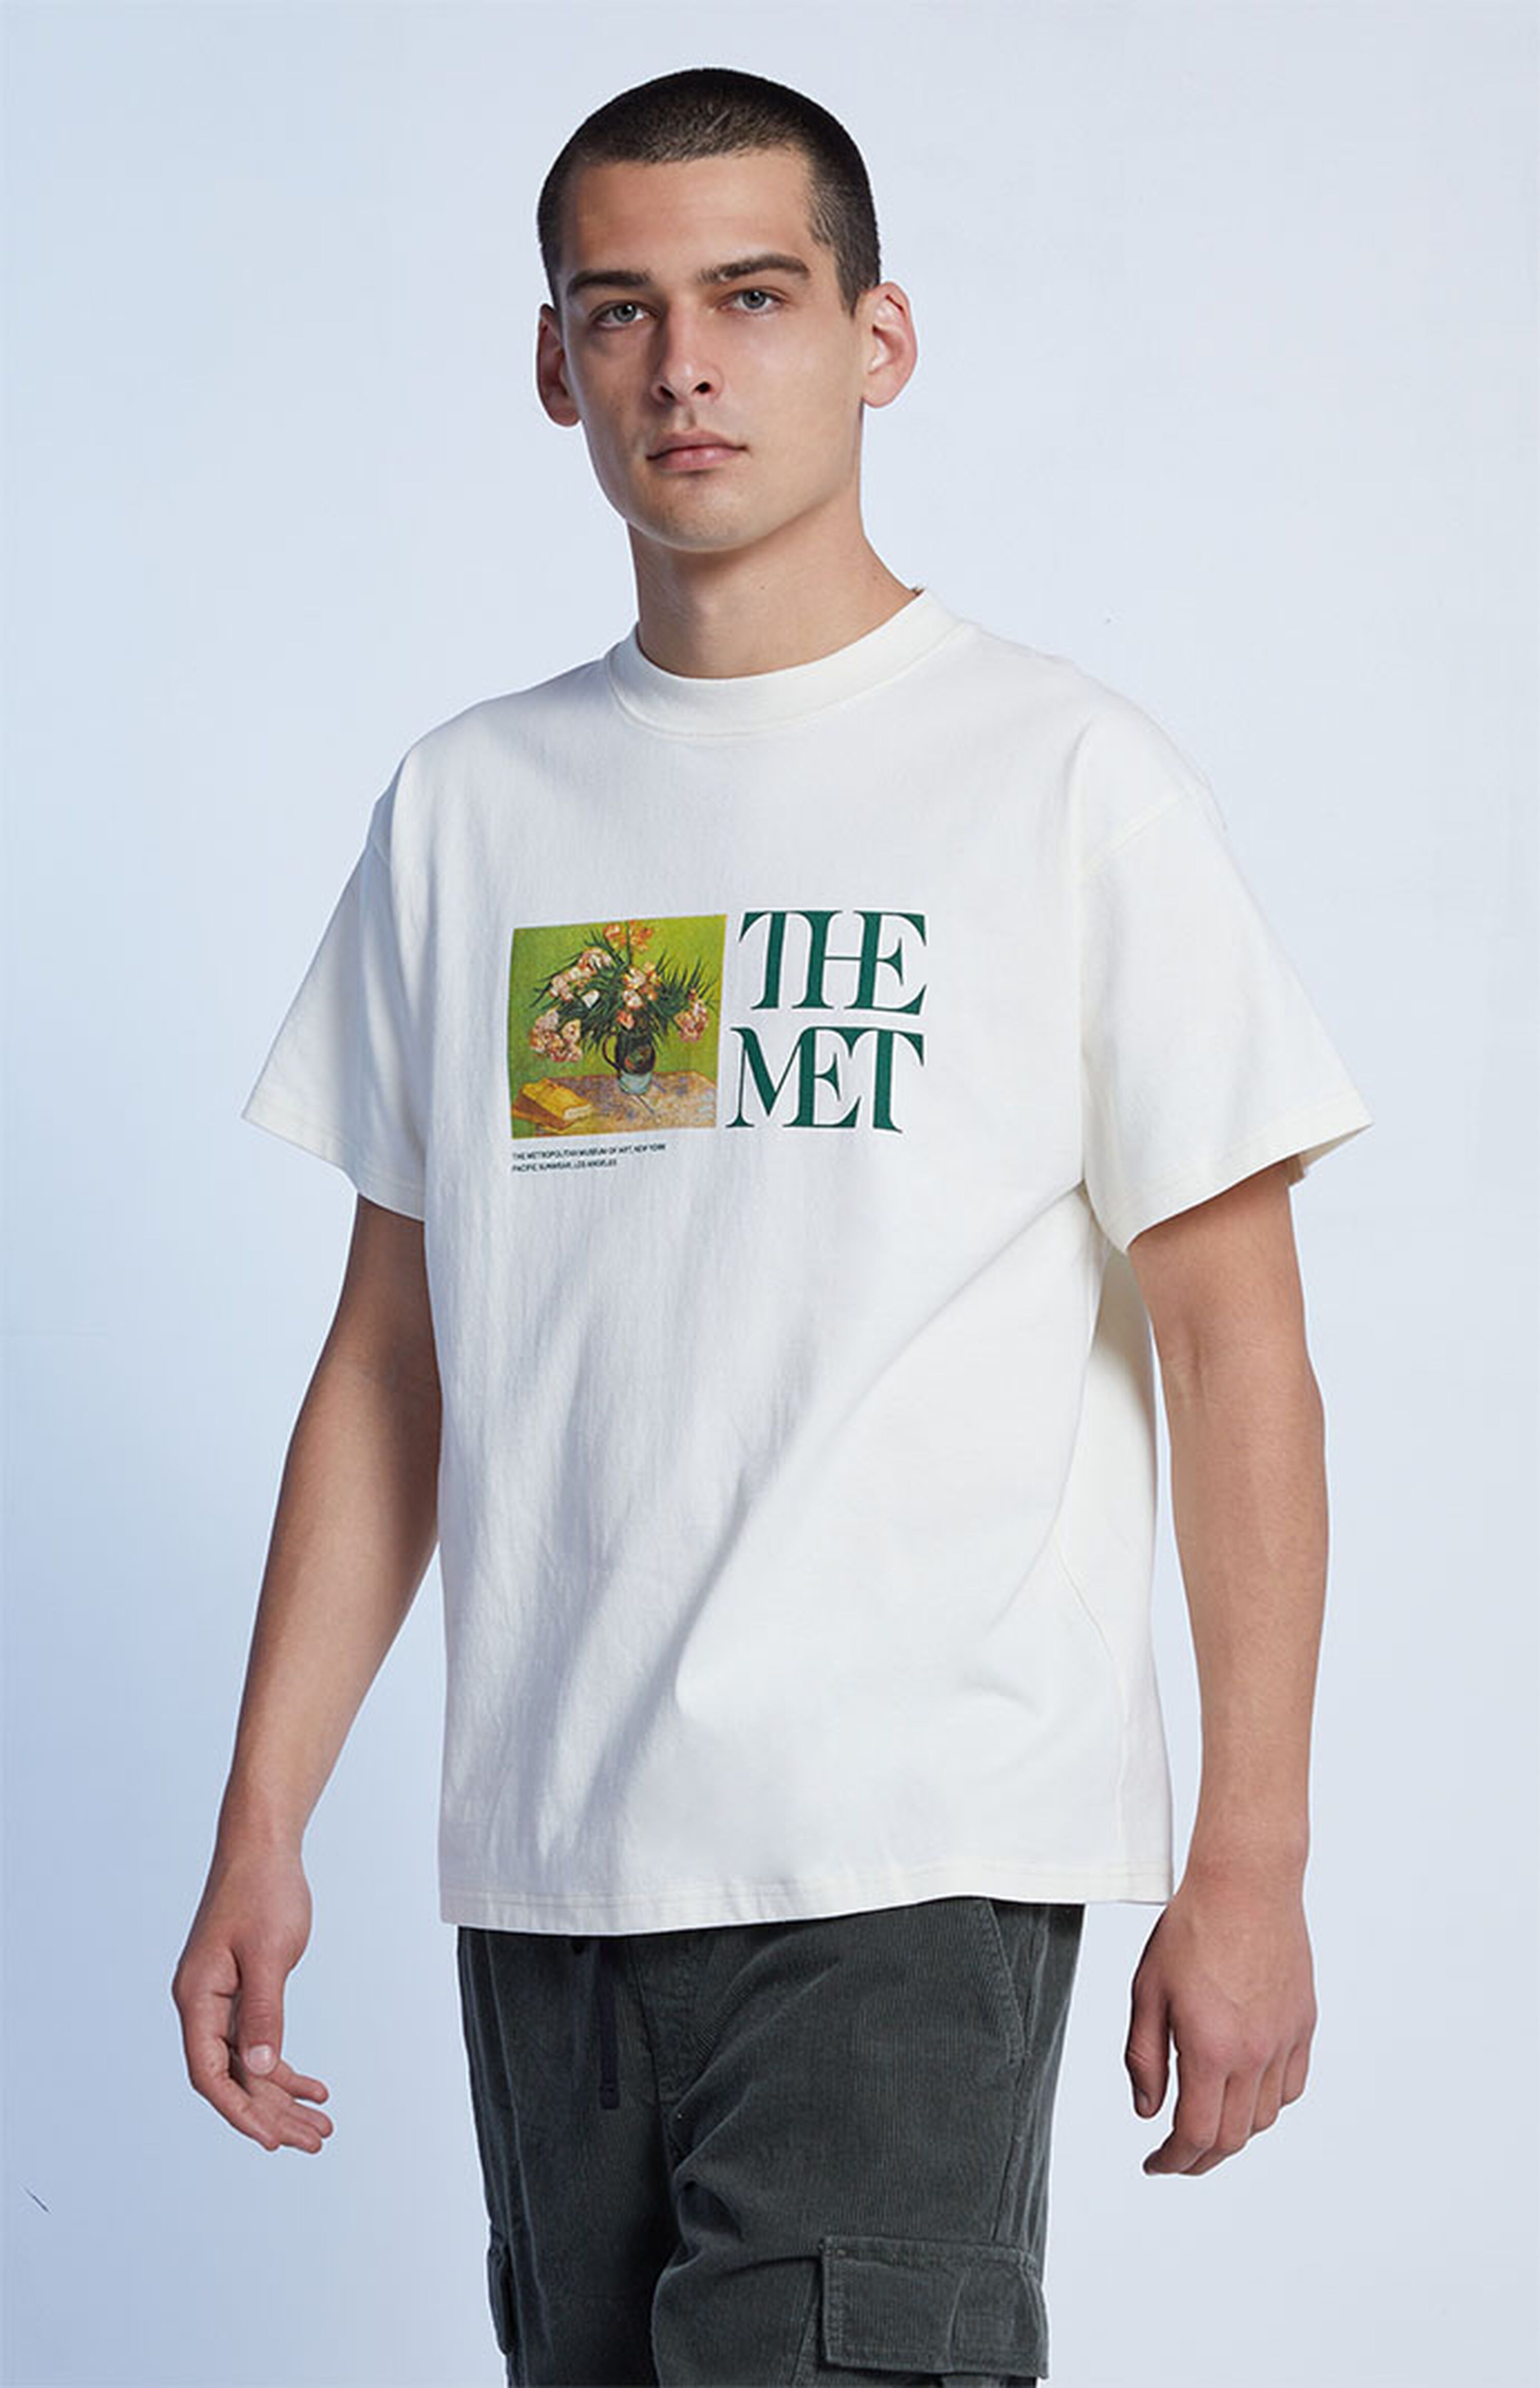 The Met x PacSun Metropolitan T-Shirt | PacSun | PacSun